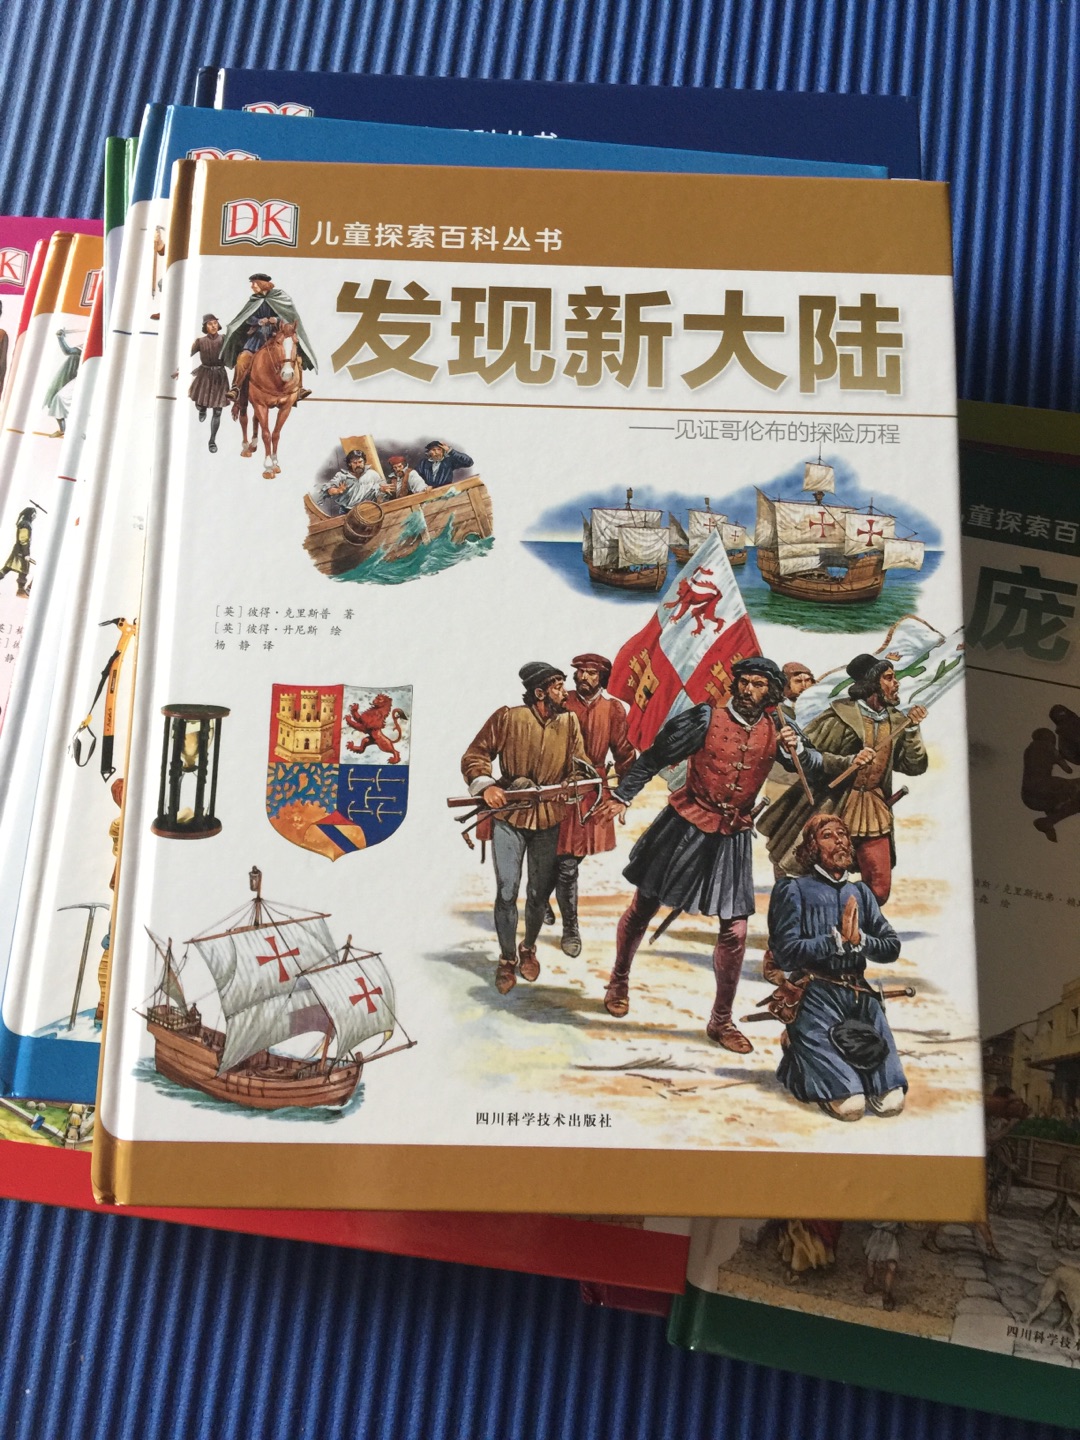 DK的书都非常不错，图片精美，内容丰富，趁活动买了很多。